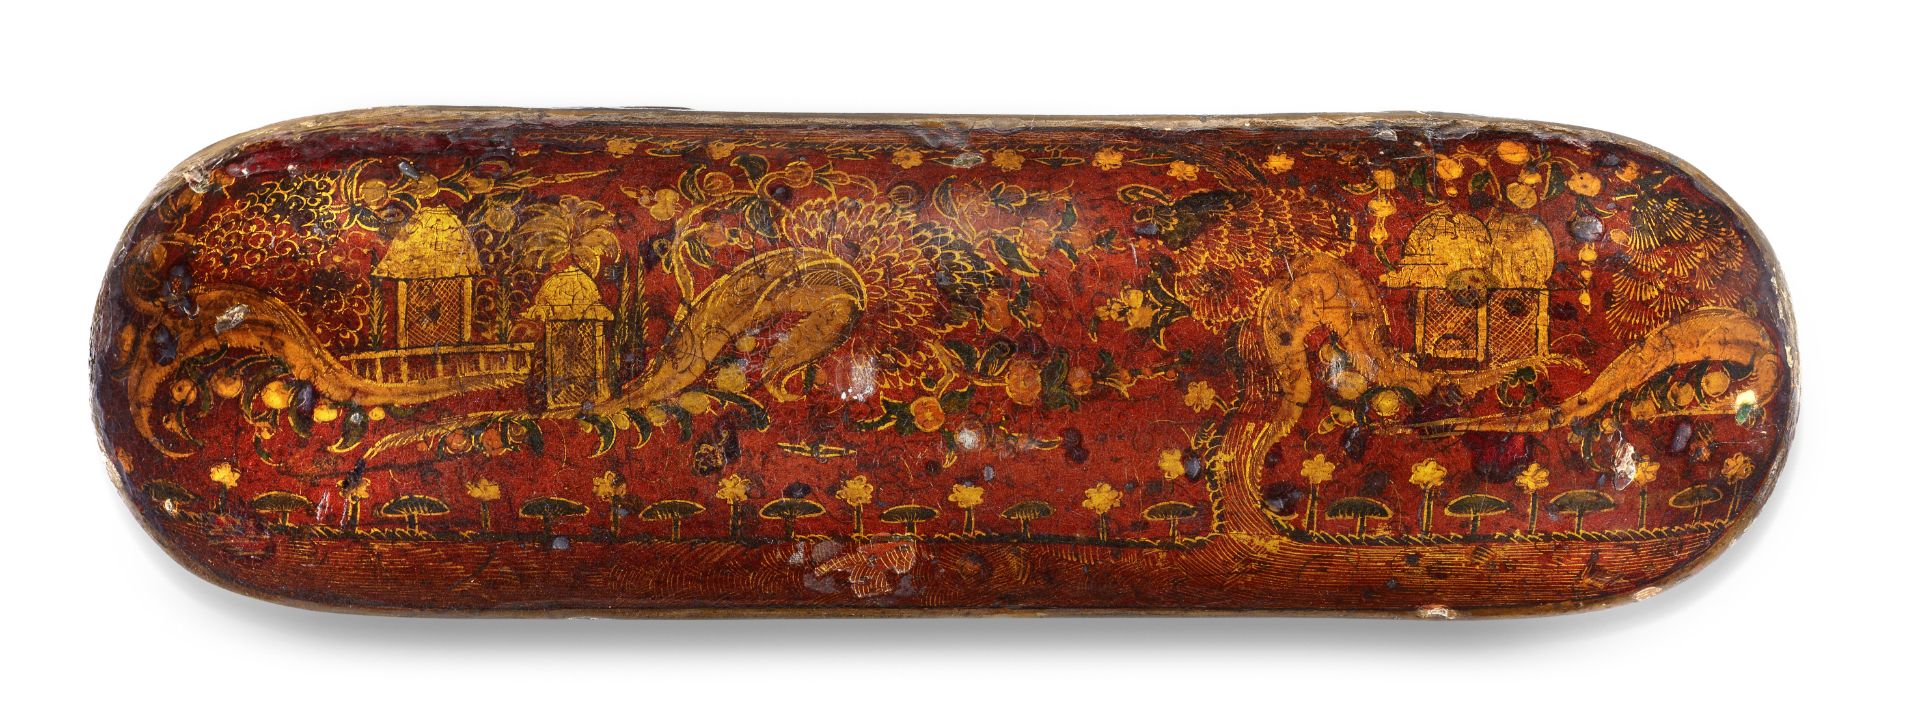 A Deccani lacquer penbox India, 17th Century